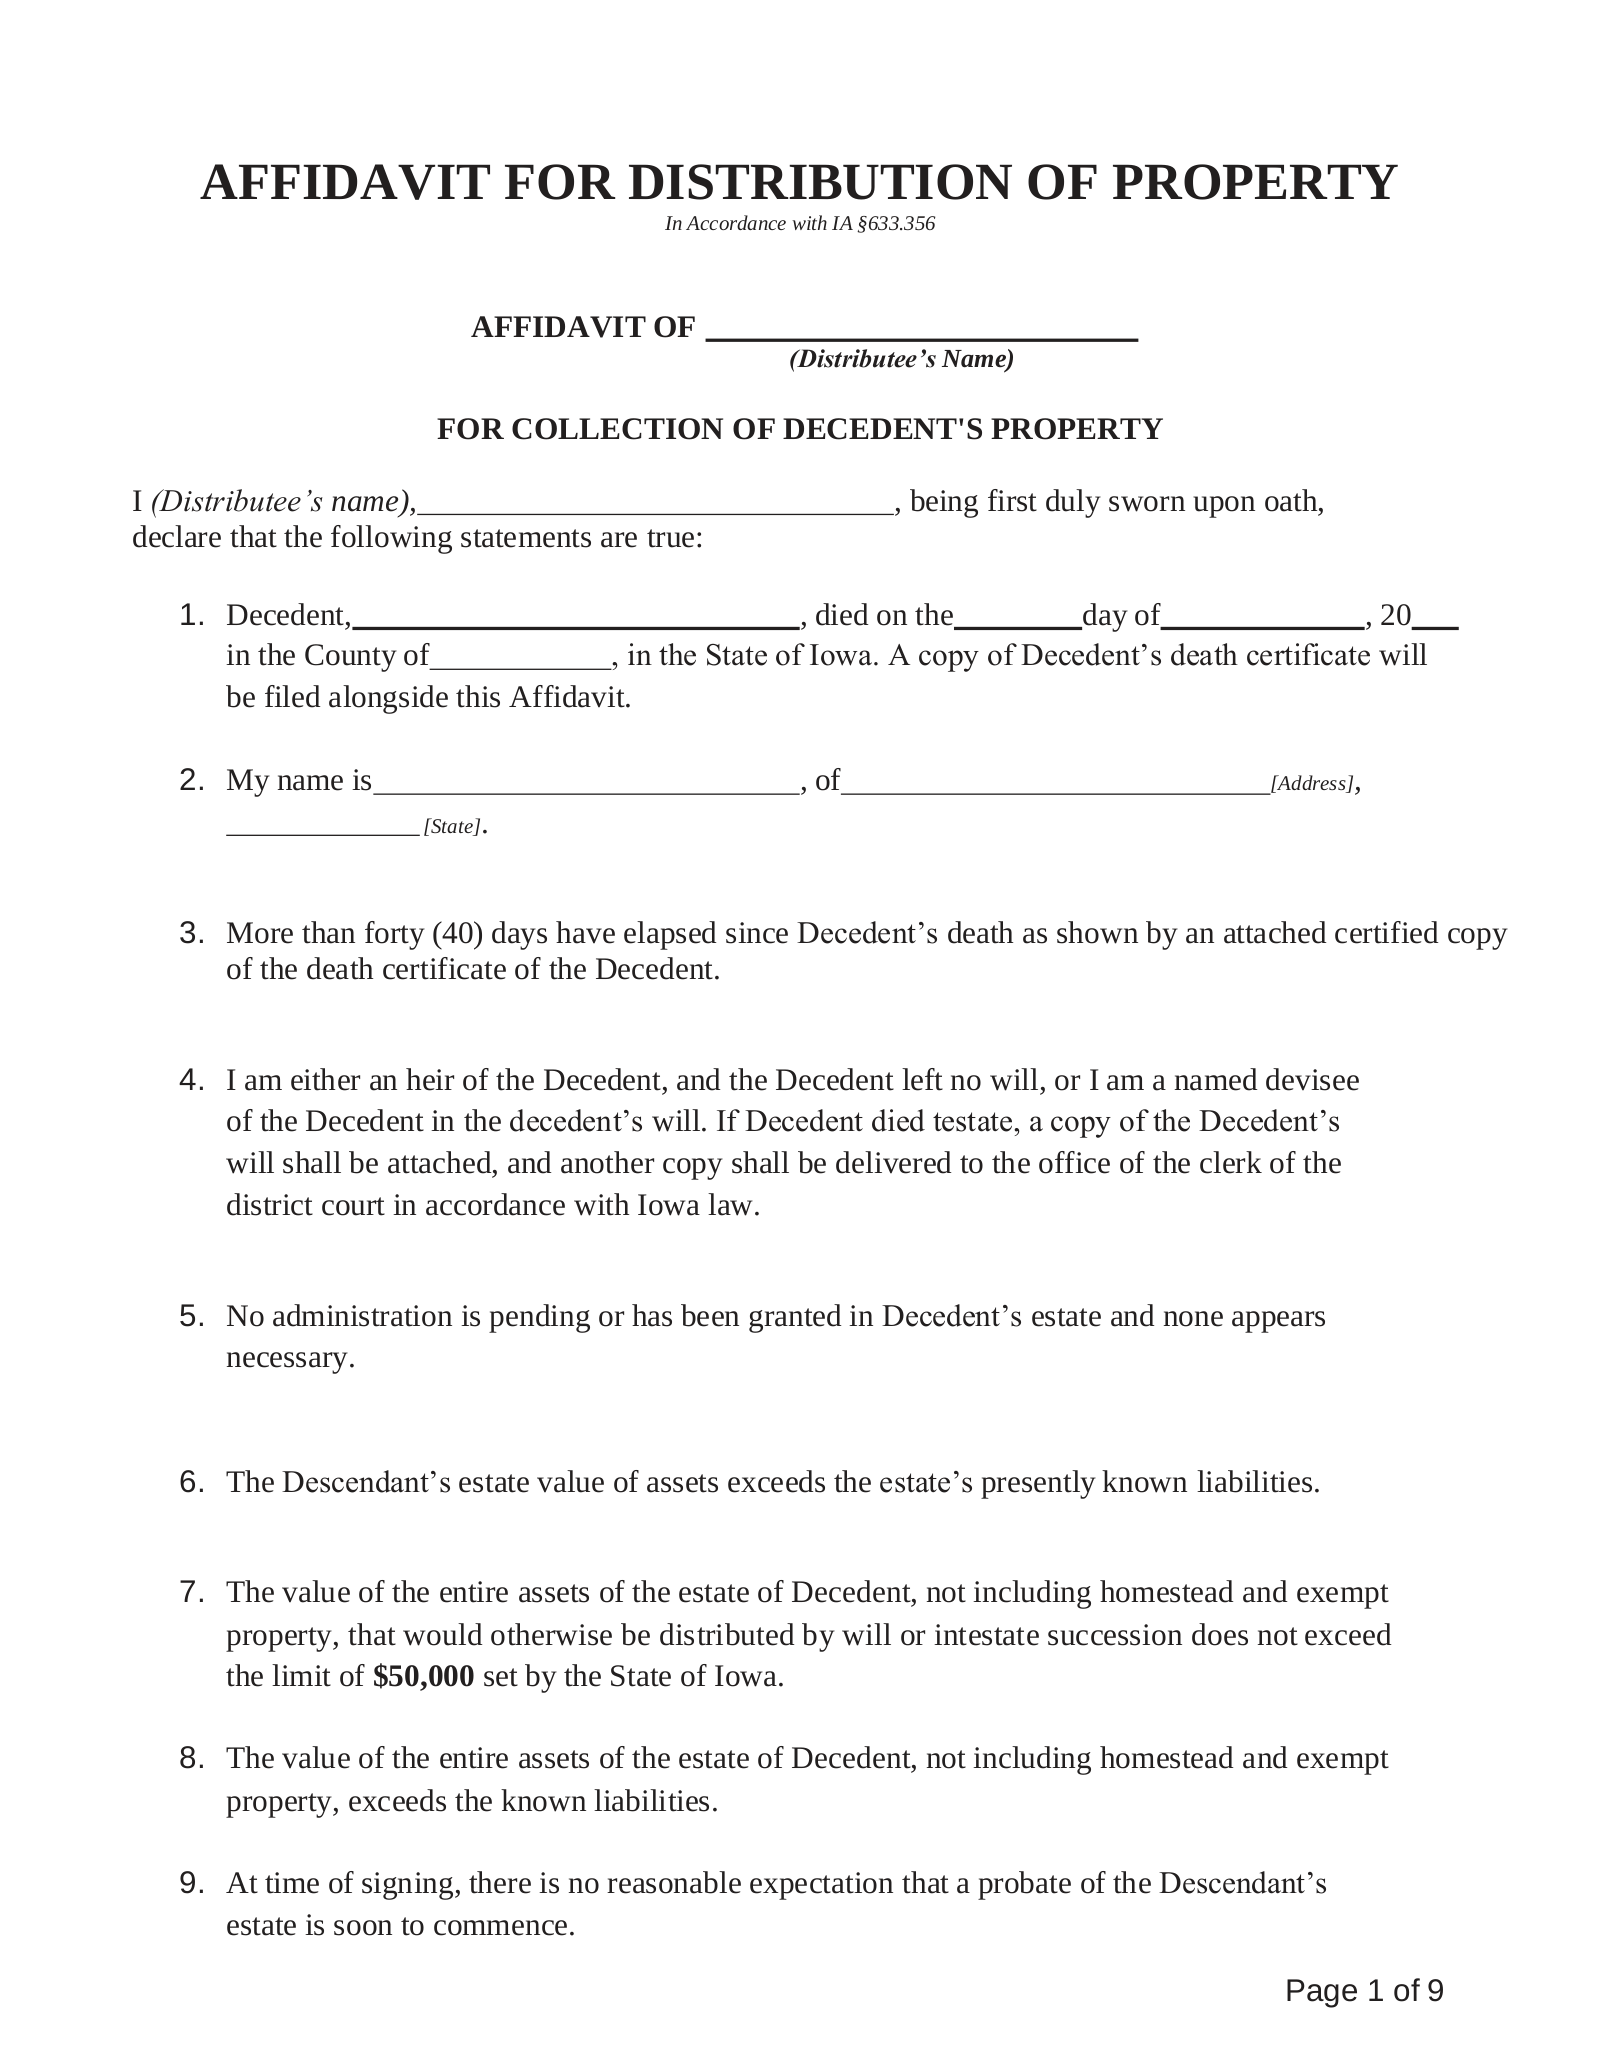 Iowa Small Estate Affidavit Form | Affidavit for Distribution of Property